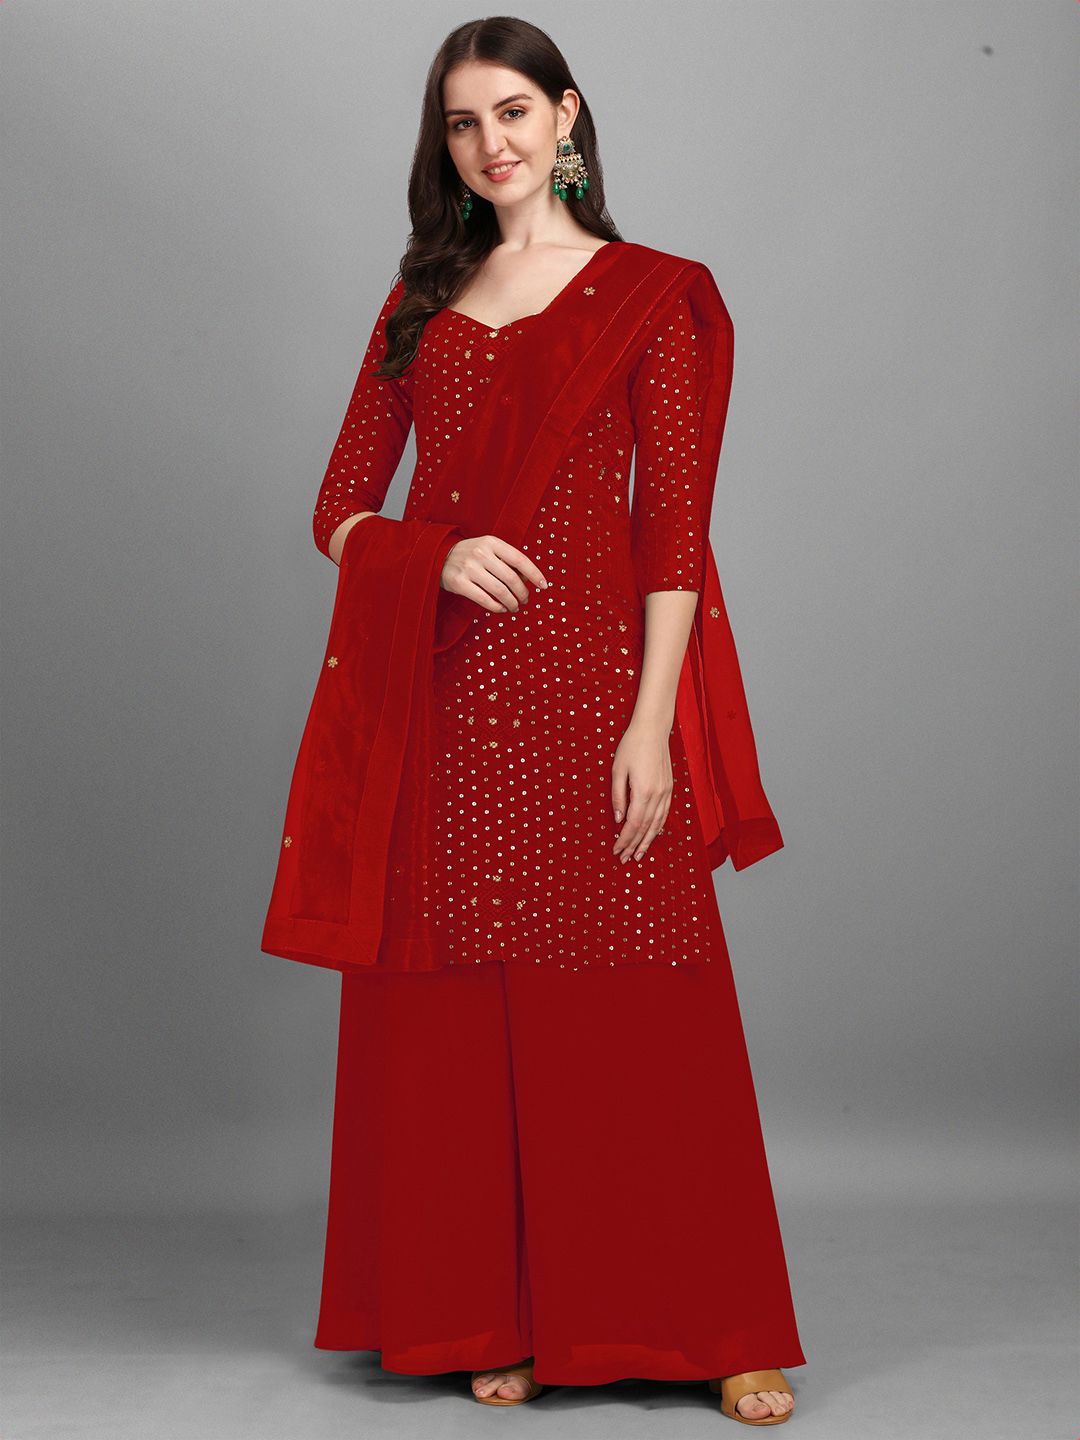 Fashionuma Red & White Pure Silk Semi-Stitched Dress Material Price in India